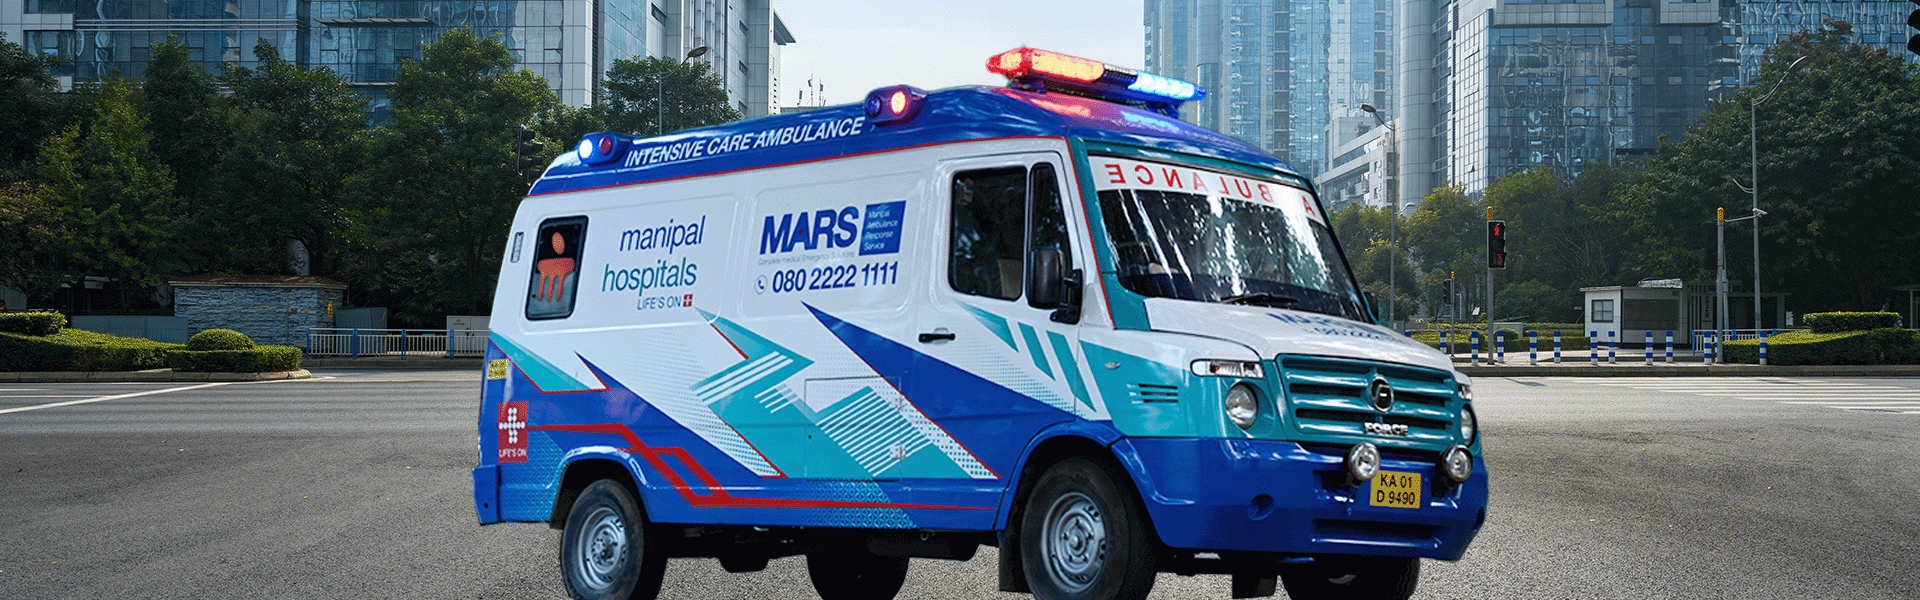 24 Hours Emergency Ambulance Service in Varthur Road, Bangalore - Manipal Hospitals